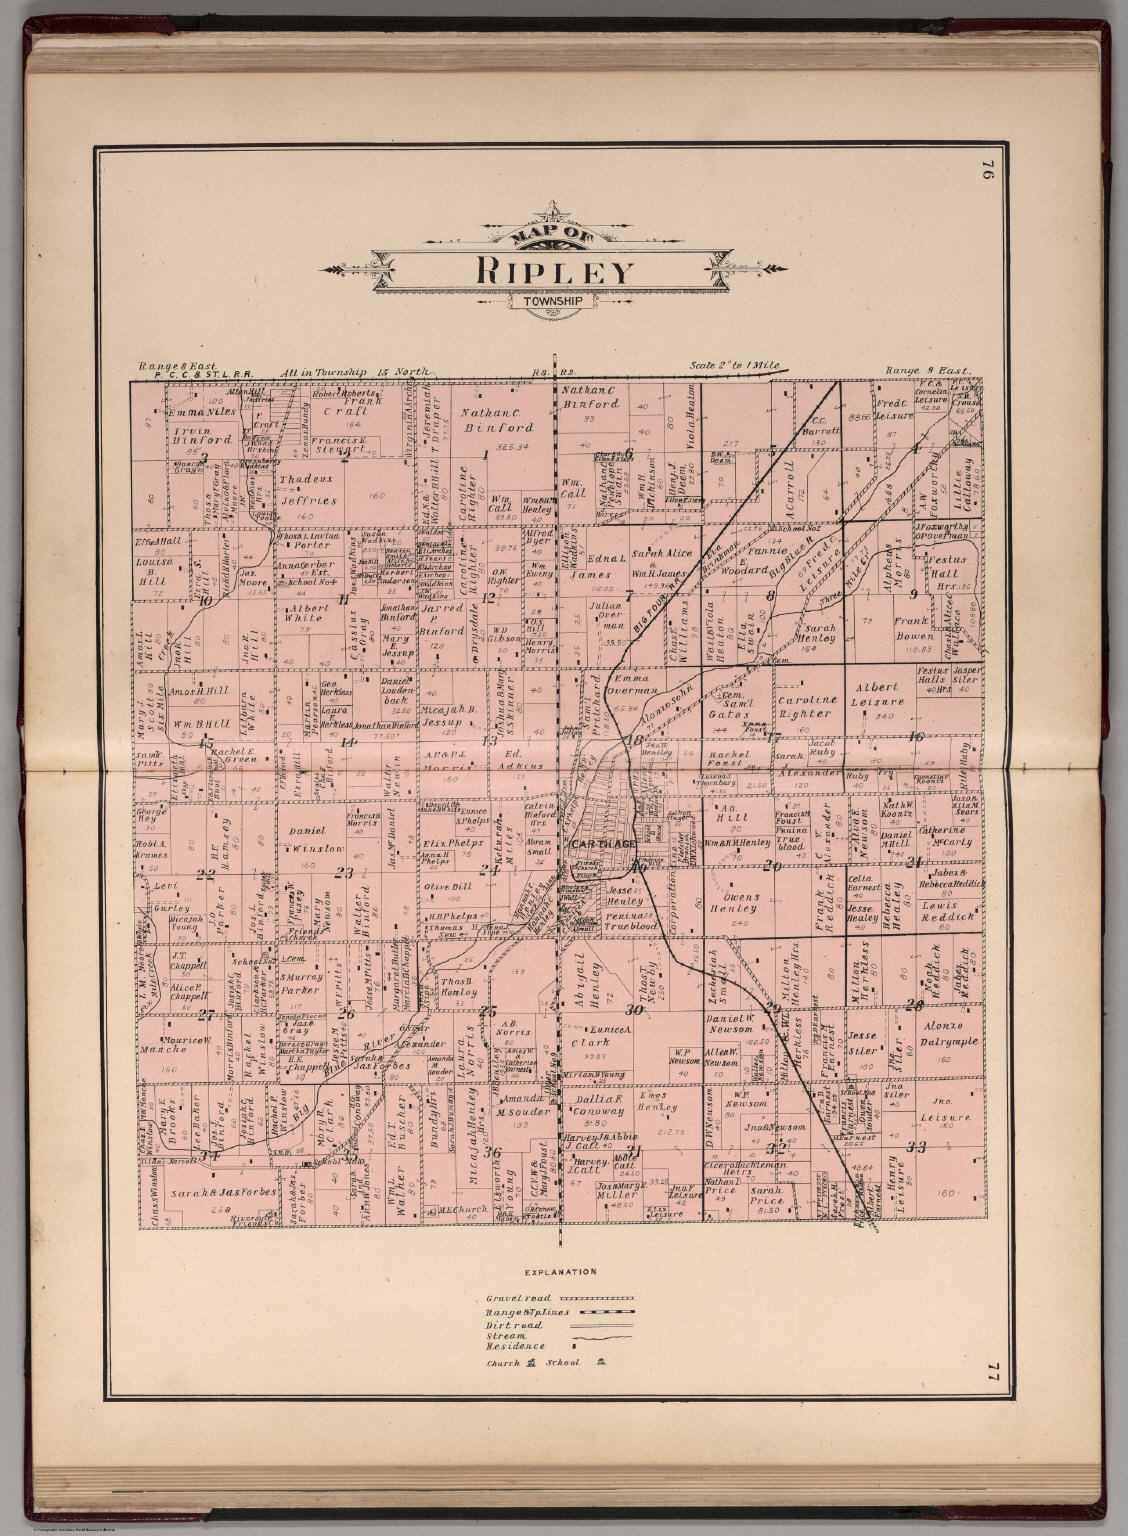 Ripley Township, Rush County, Indiana. David Rumsey Historical Map